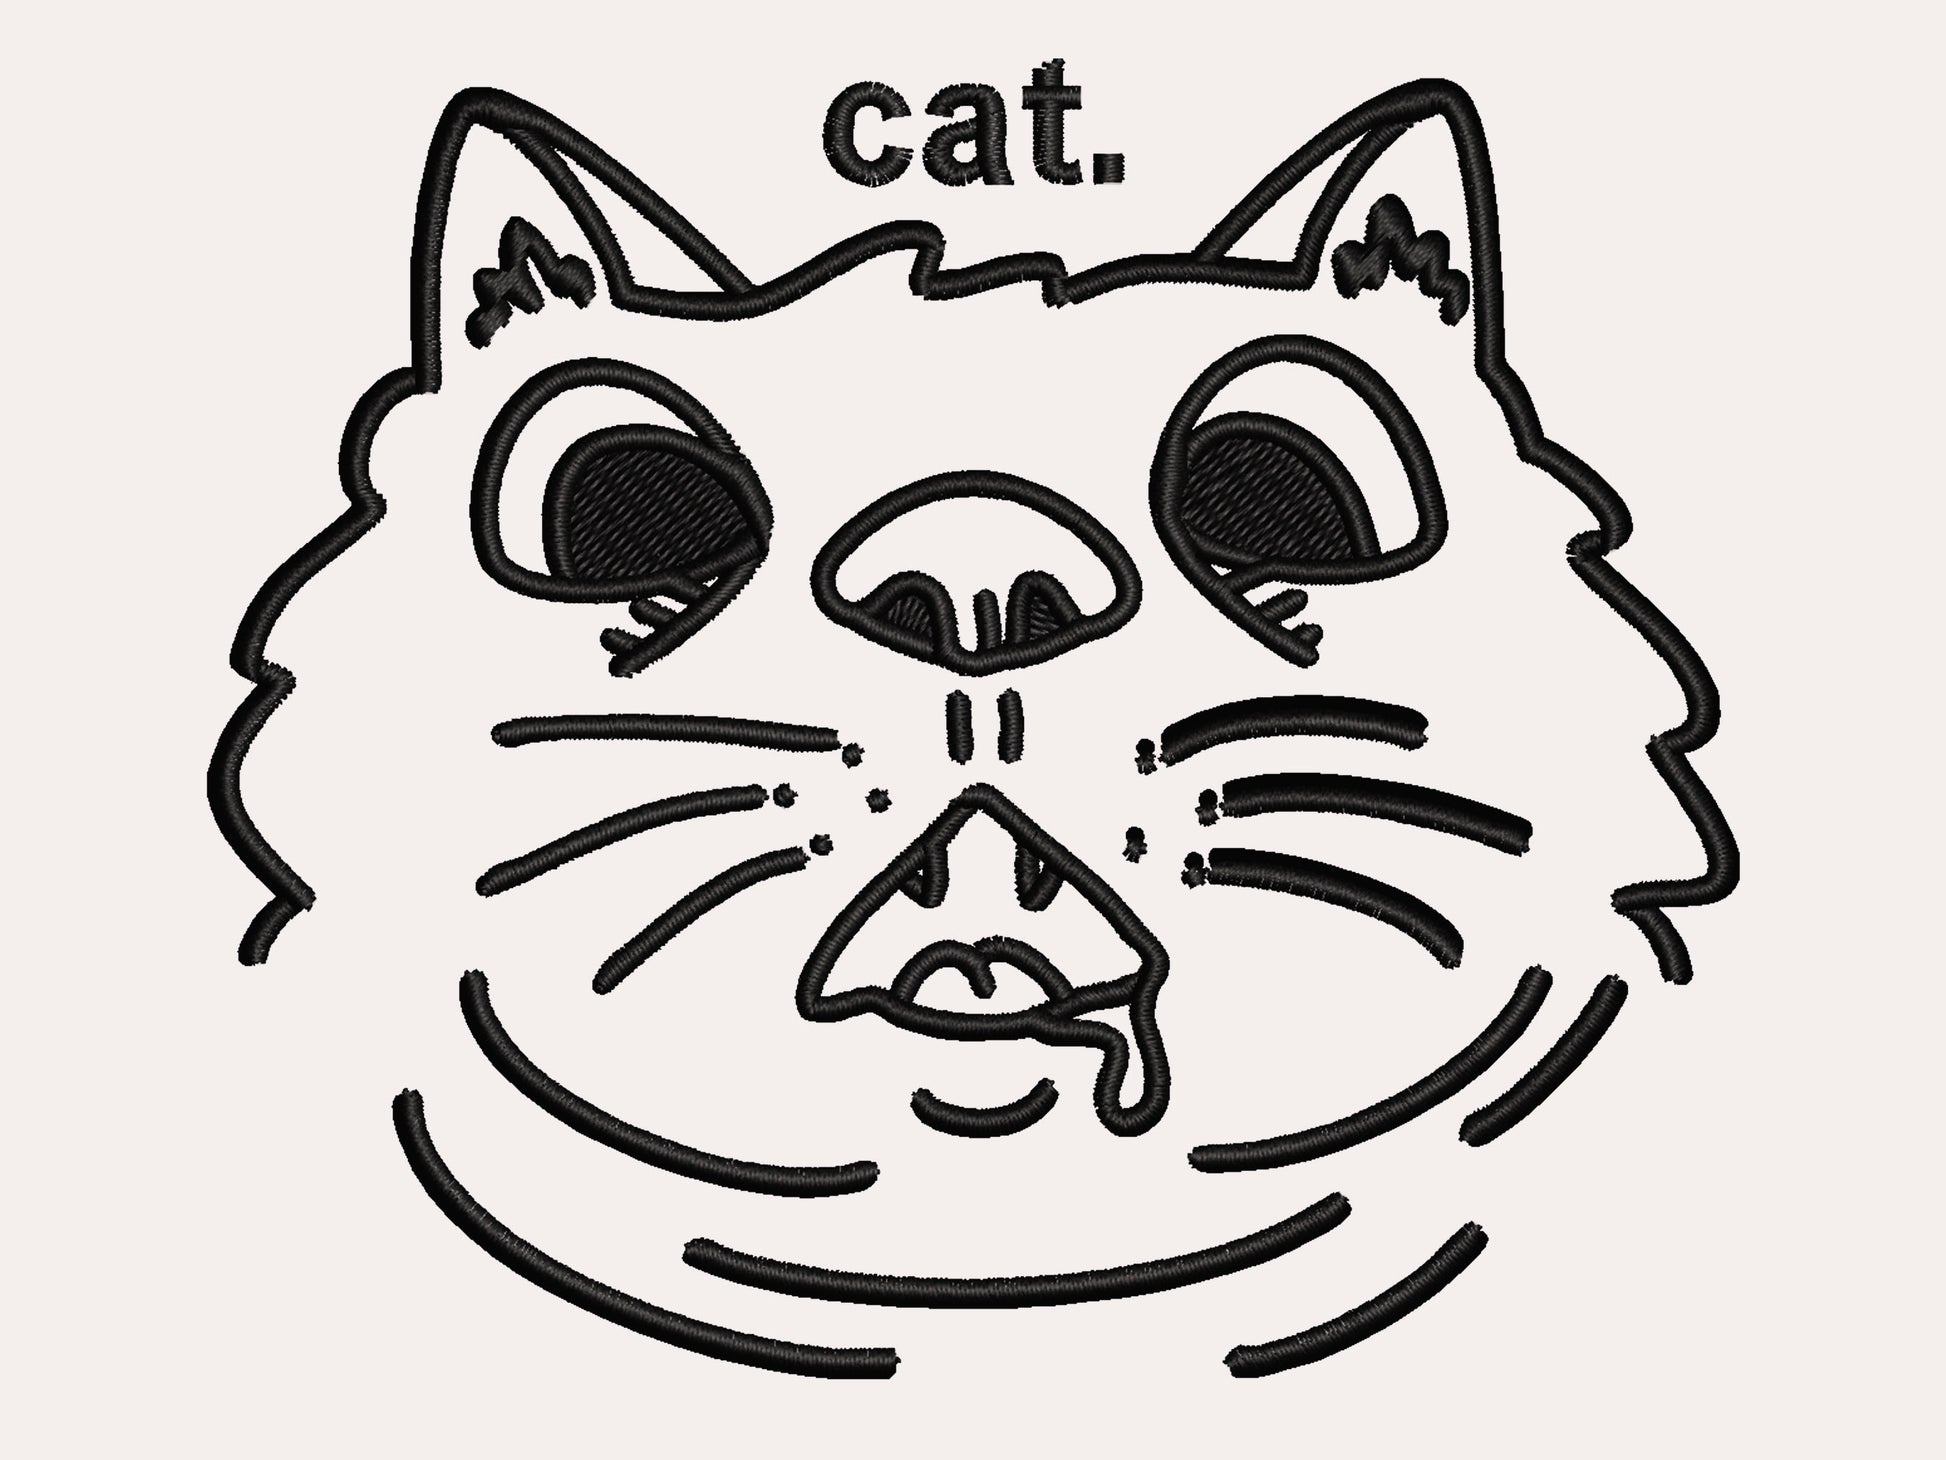 Embroidered cat design